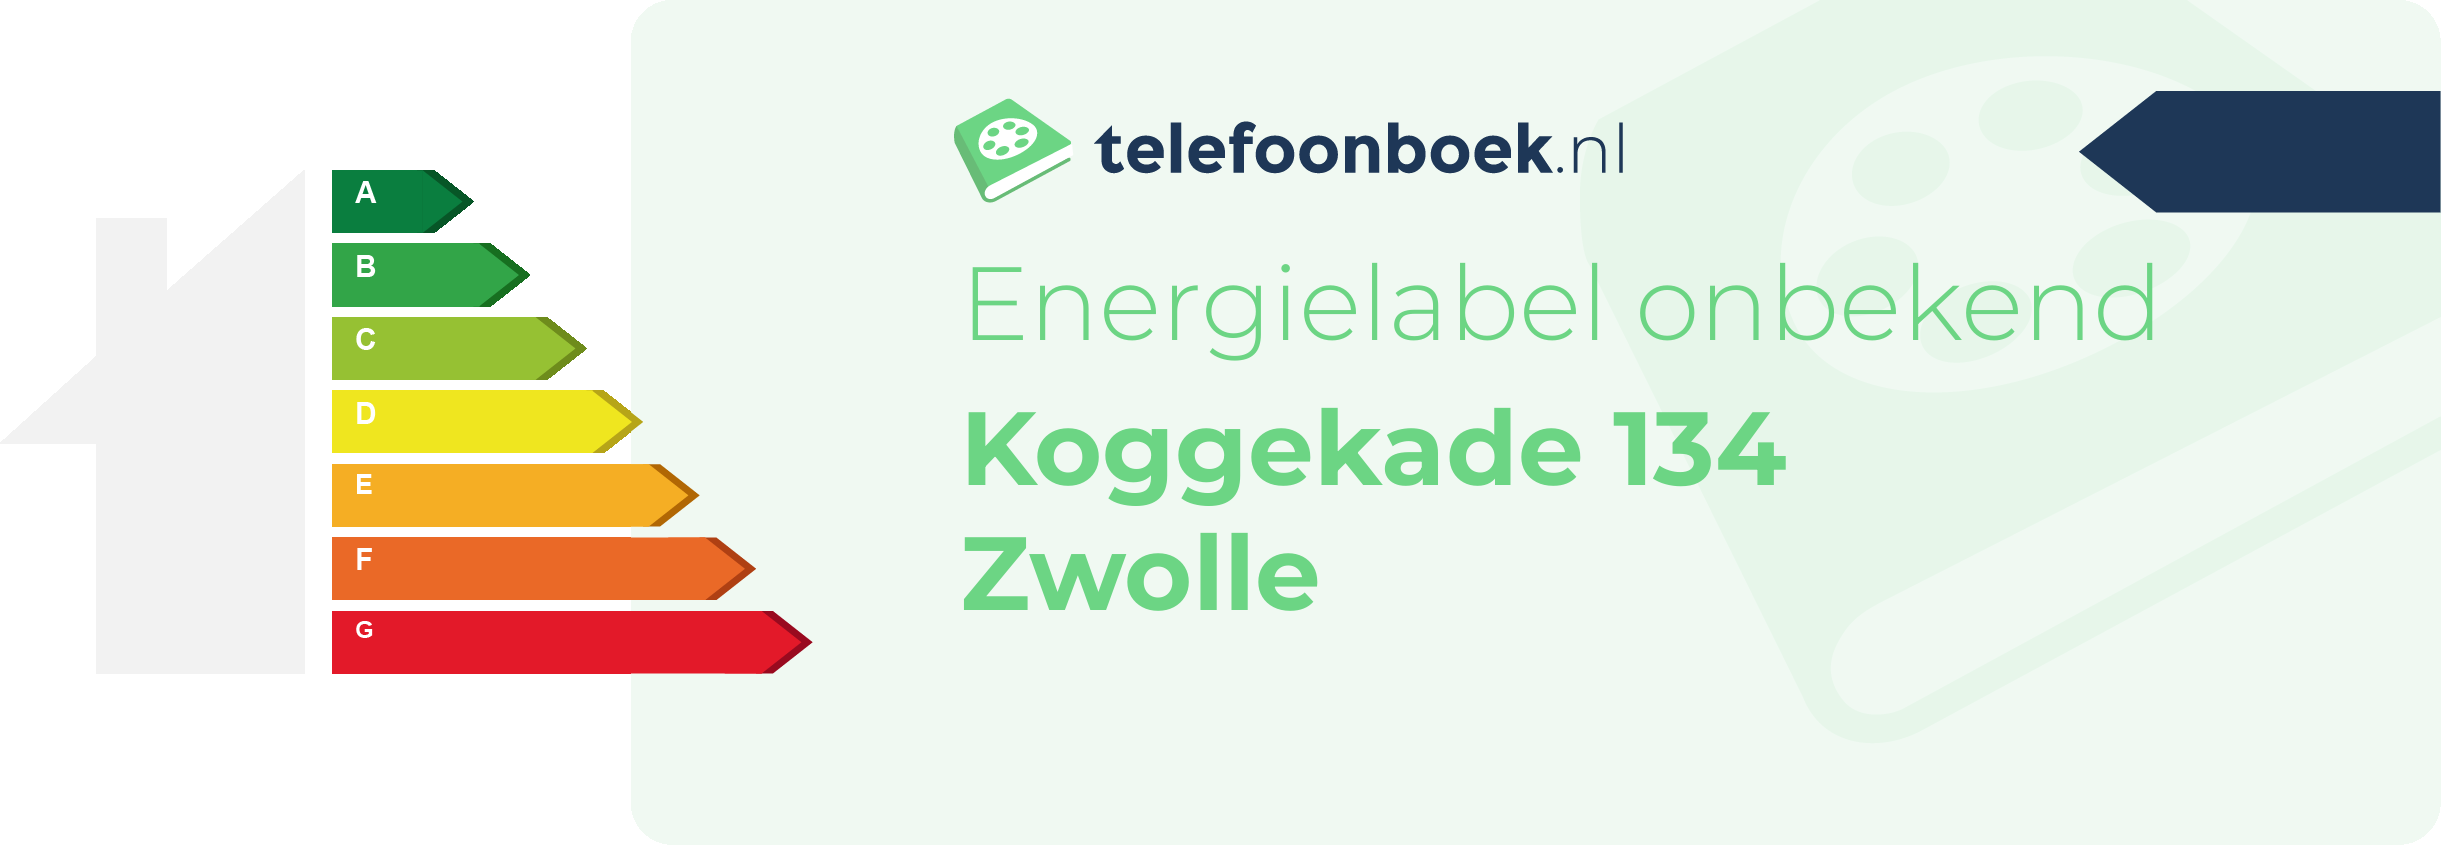 Energielabel Koggekade 134 Zwolle